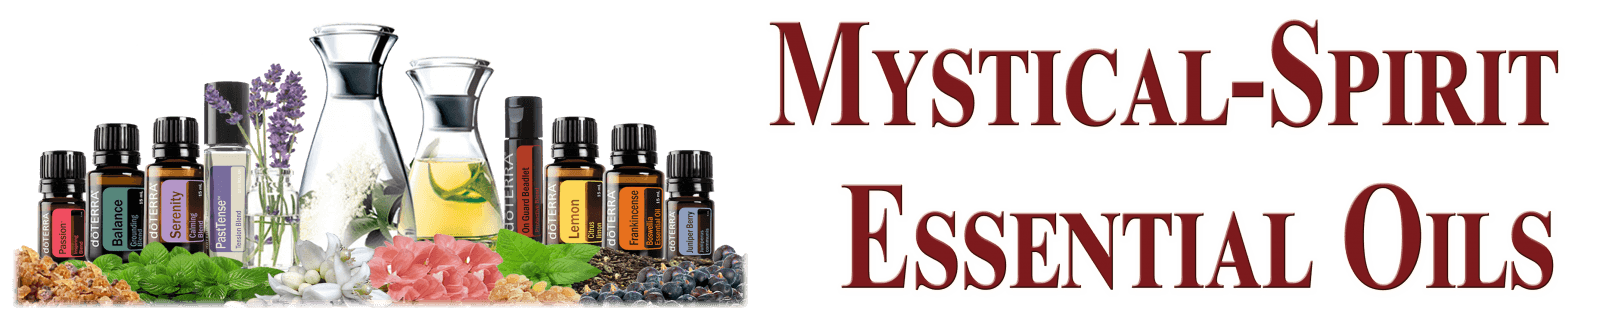 Mystical-Spirit Essential Oils